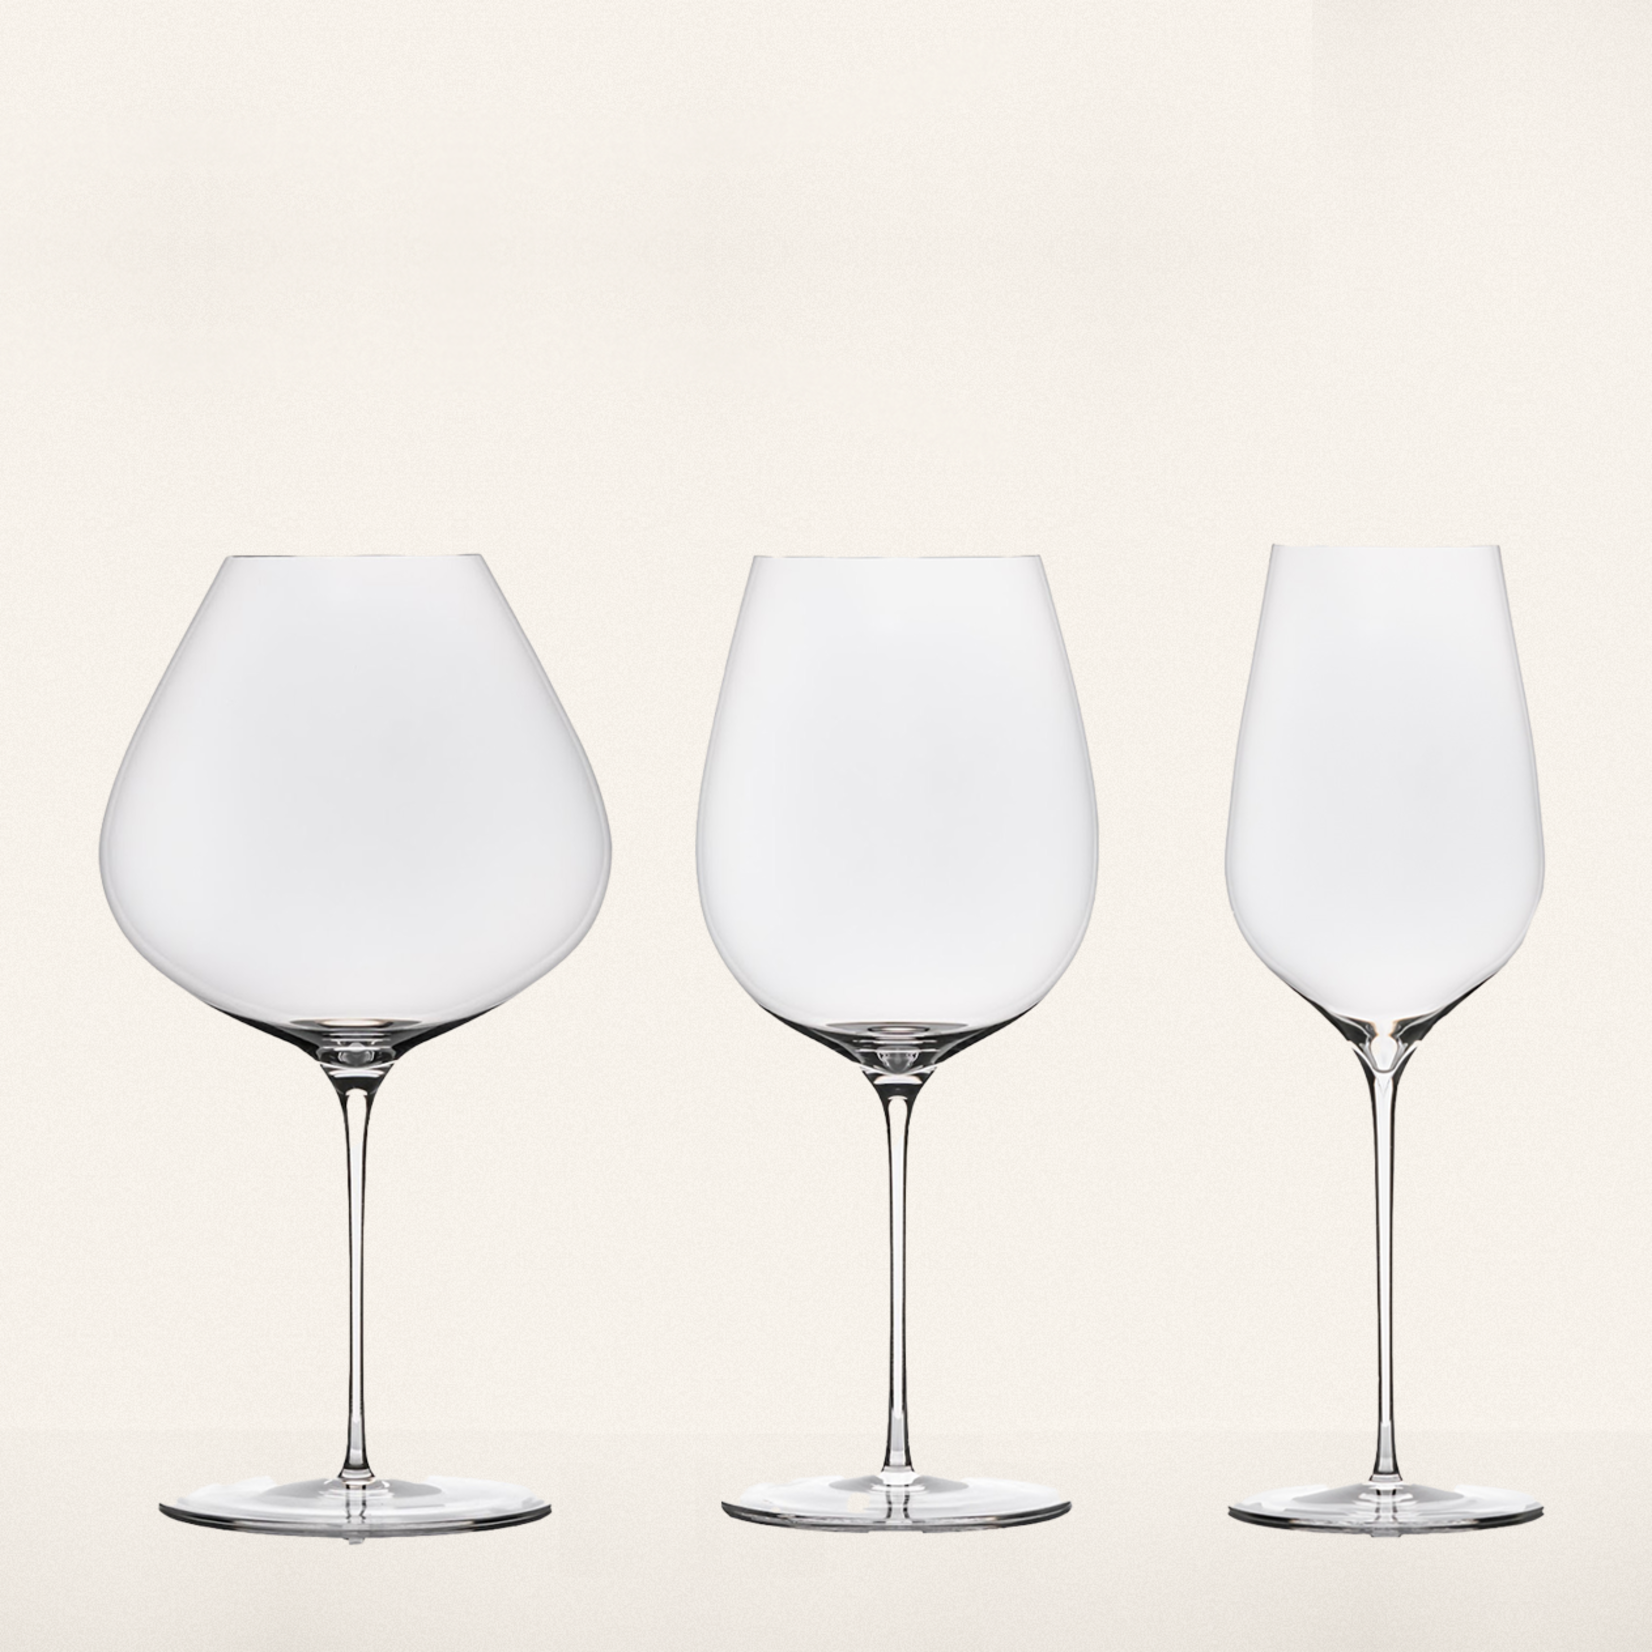 Sydonios L'Esthete - set of 6 glasses